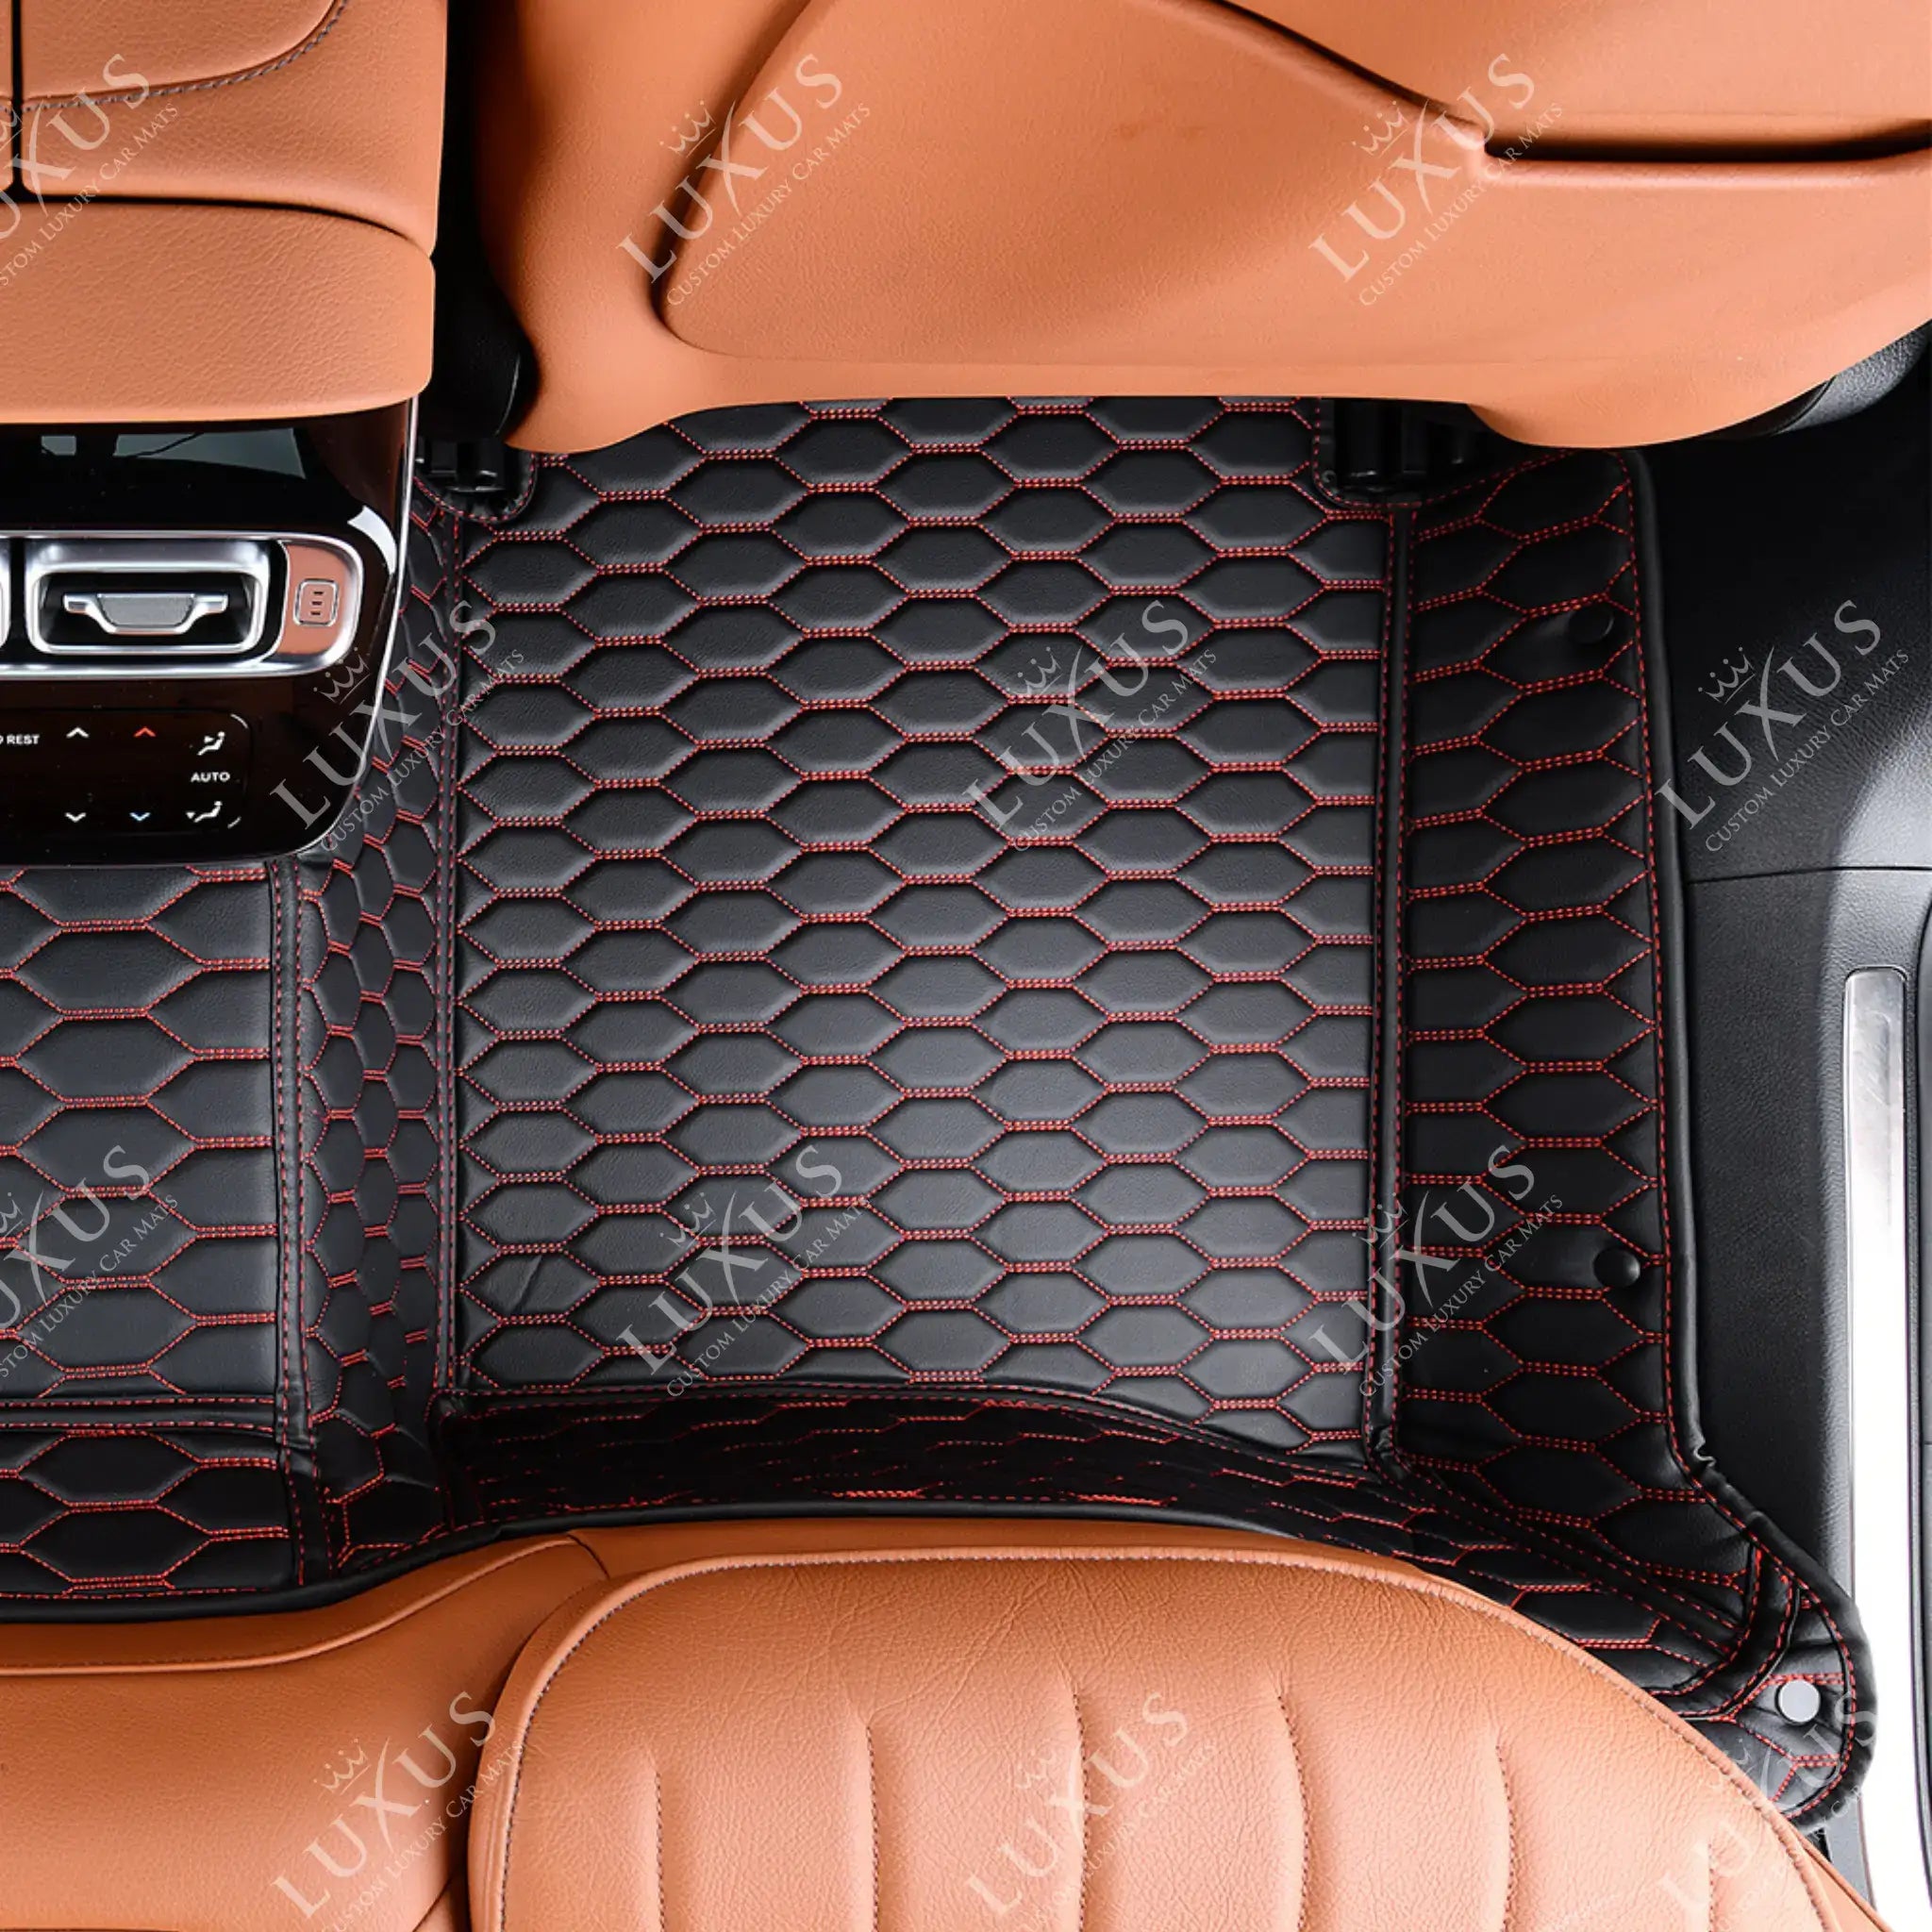 Black & Red Stitching Honeycomb Luxury Car Mats Set